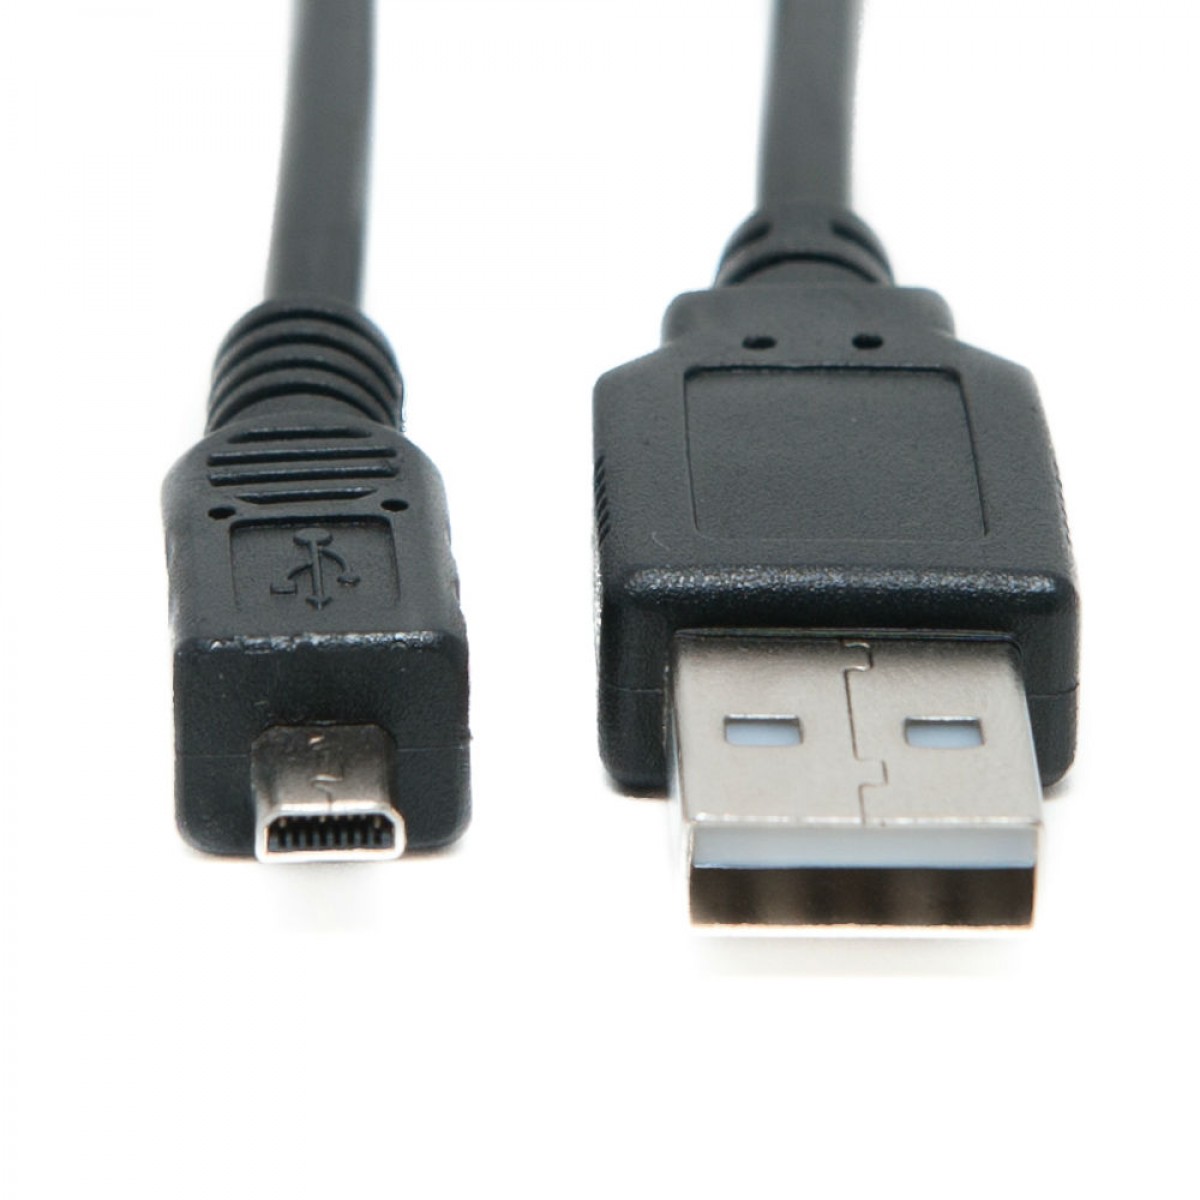 Digipartspower USB Data Sync Cable Cord Lead for FujiFilm Camera Finepix JX580 JX700 XP21 XP150 